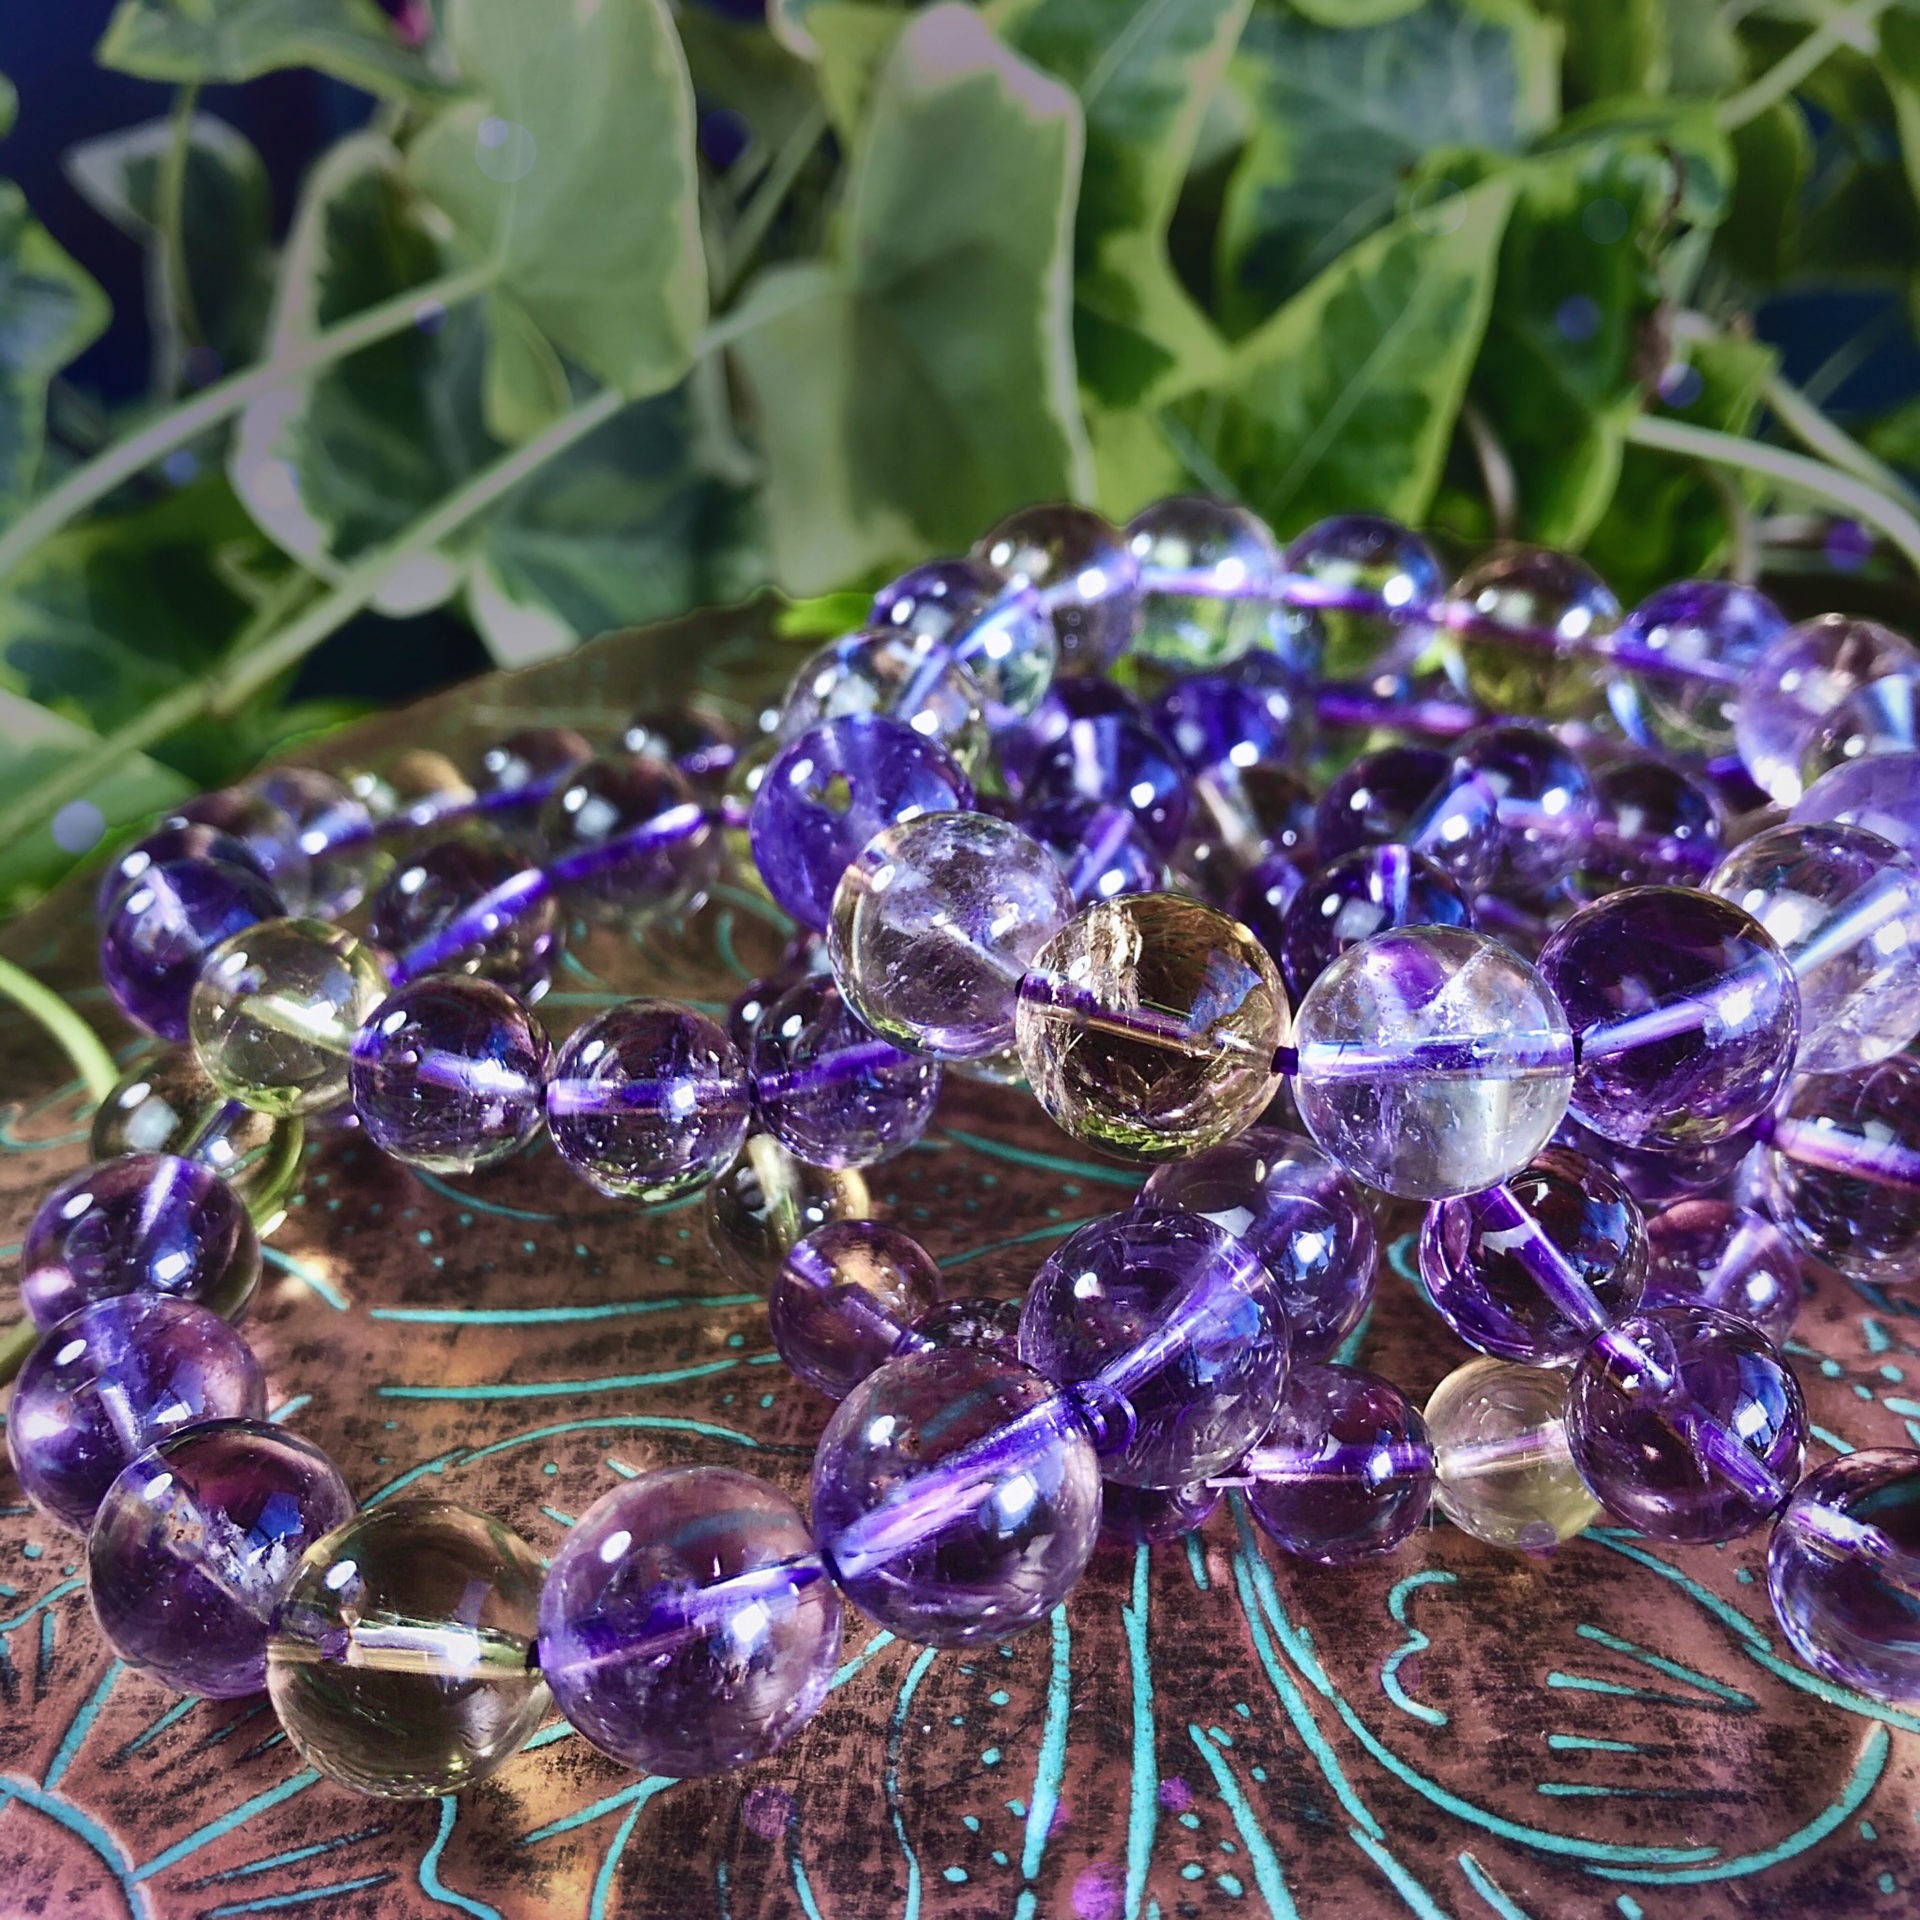 Amethyst Purple Rhinestones - Jelly AB Rhinestones – The Crafting Coder